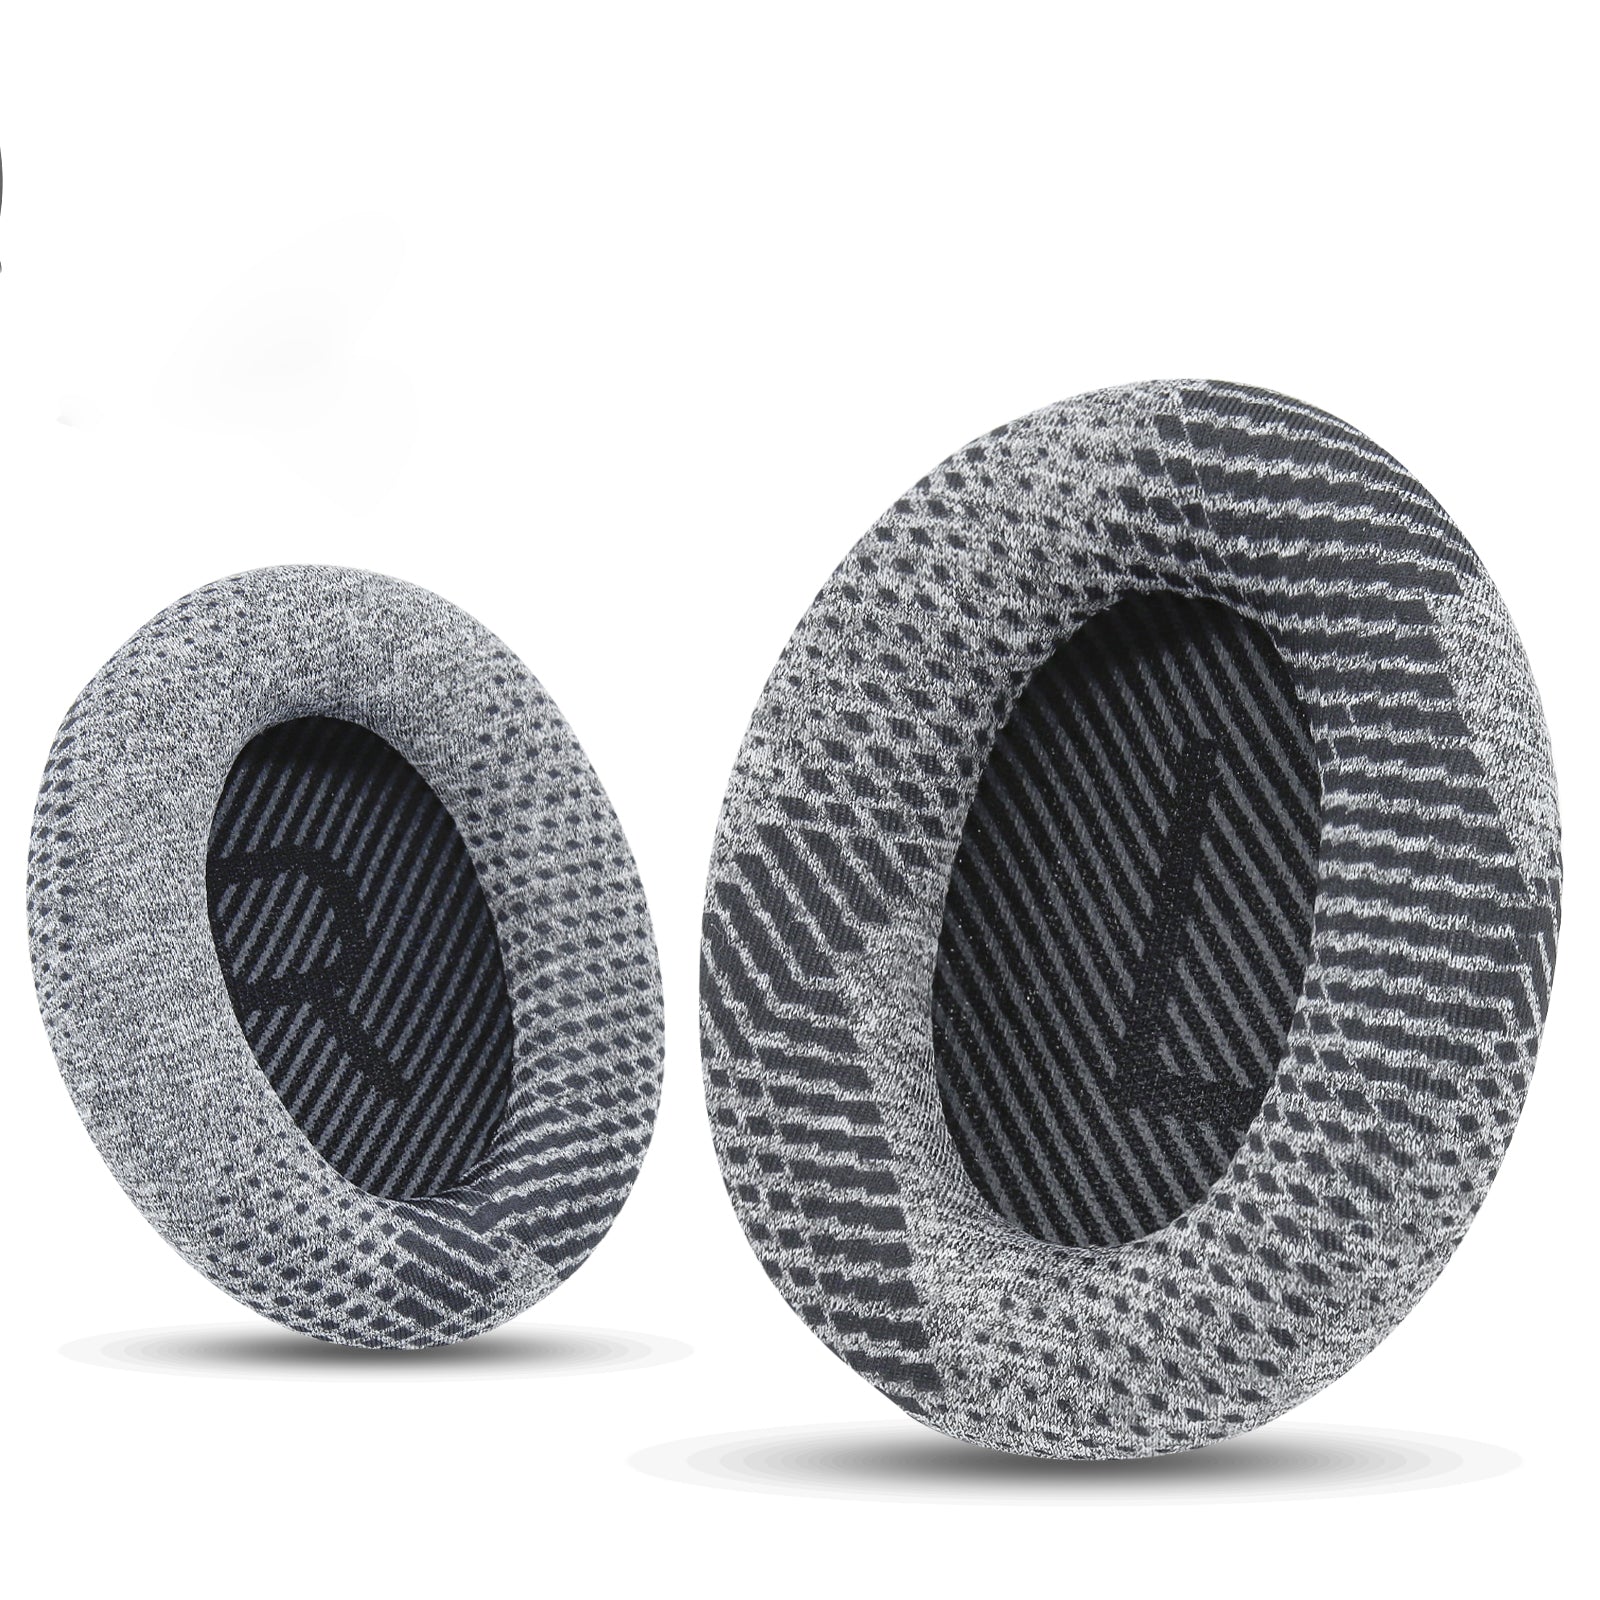 Professional Fabric Bose Headphones Replacement Ear Pads-Grey Pattern & Black Scrims